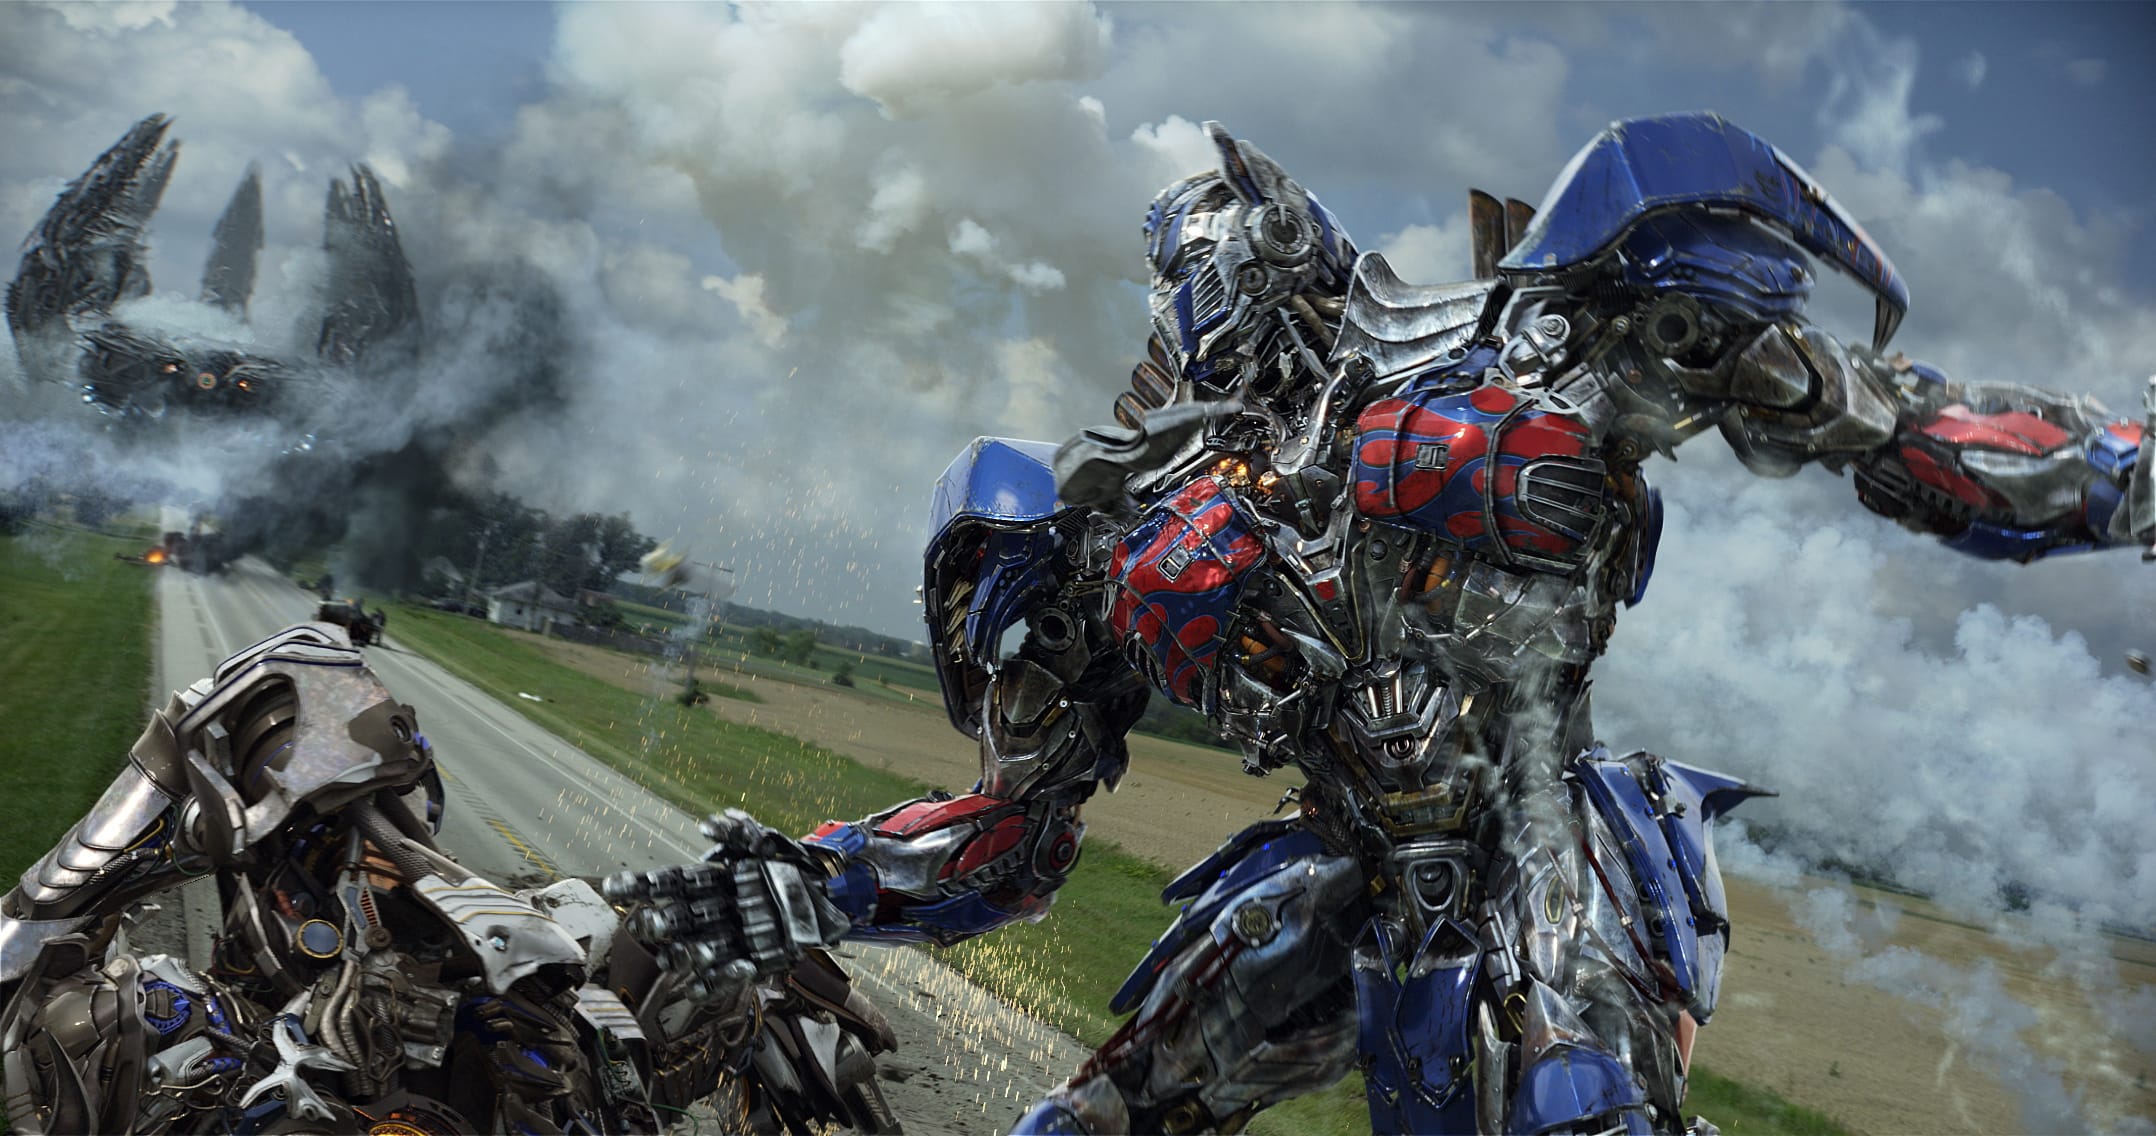 Paramount Pictures
Optimus Prime returns in the film, u201cTransformers: Age of Extinction.u201d